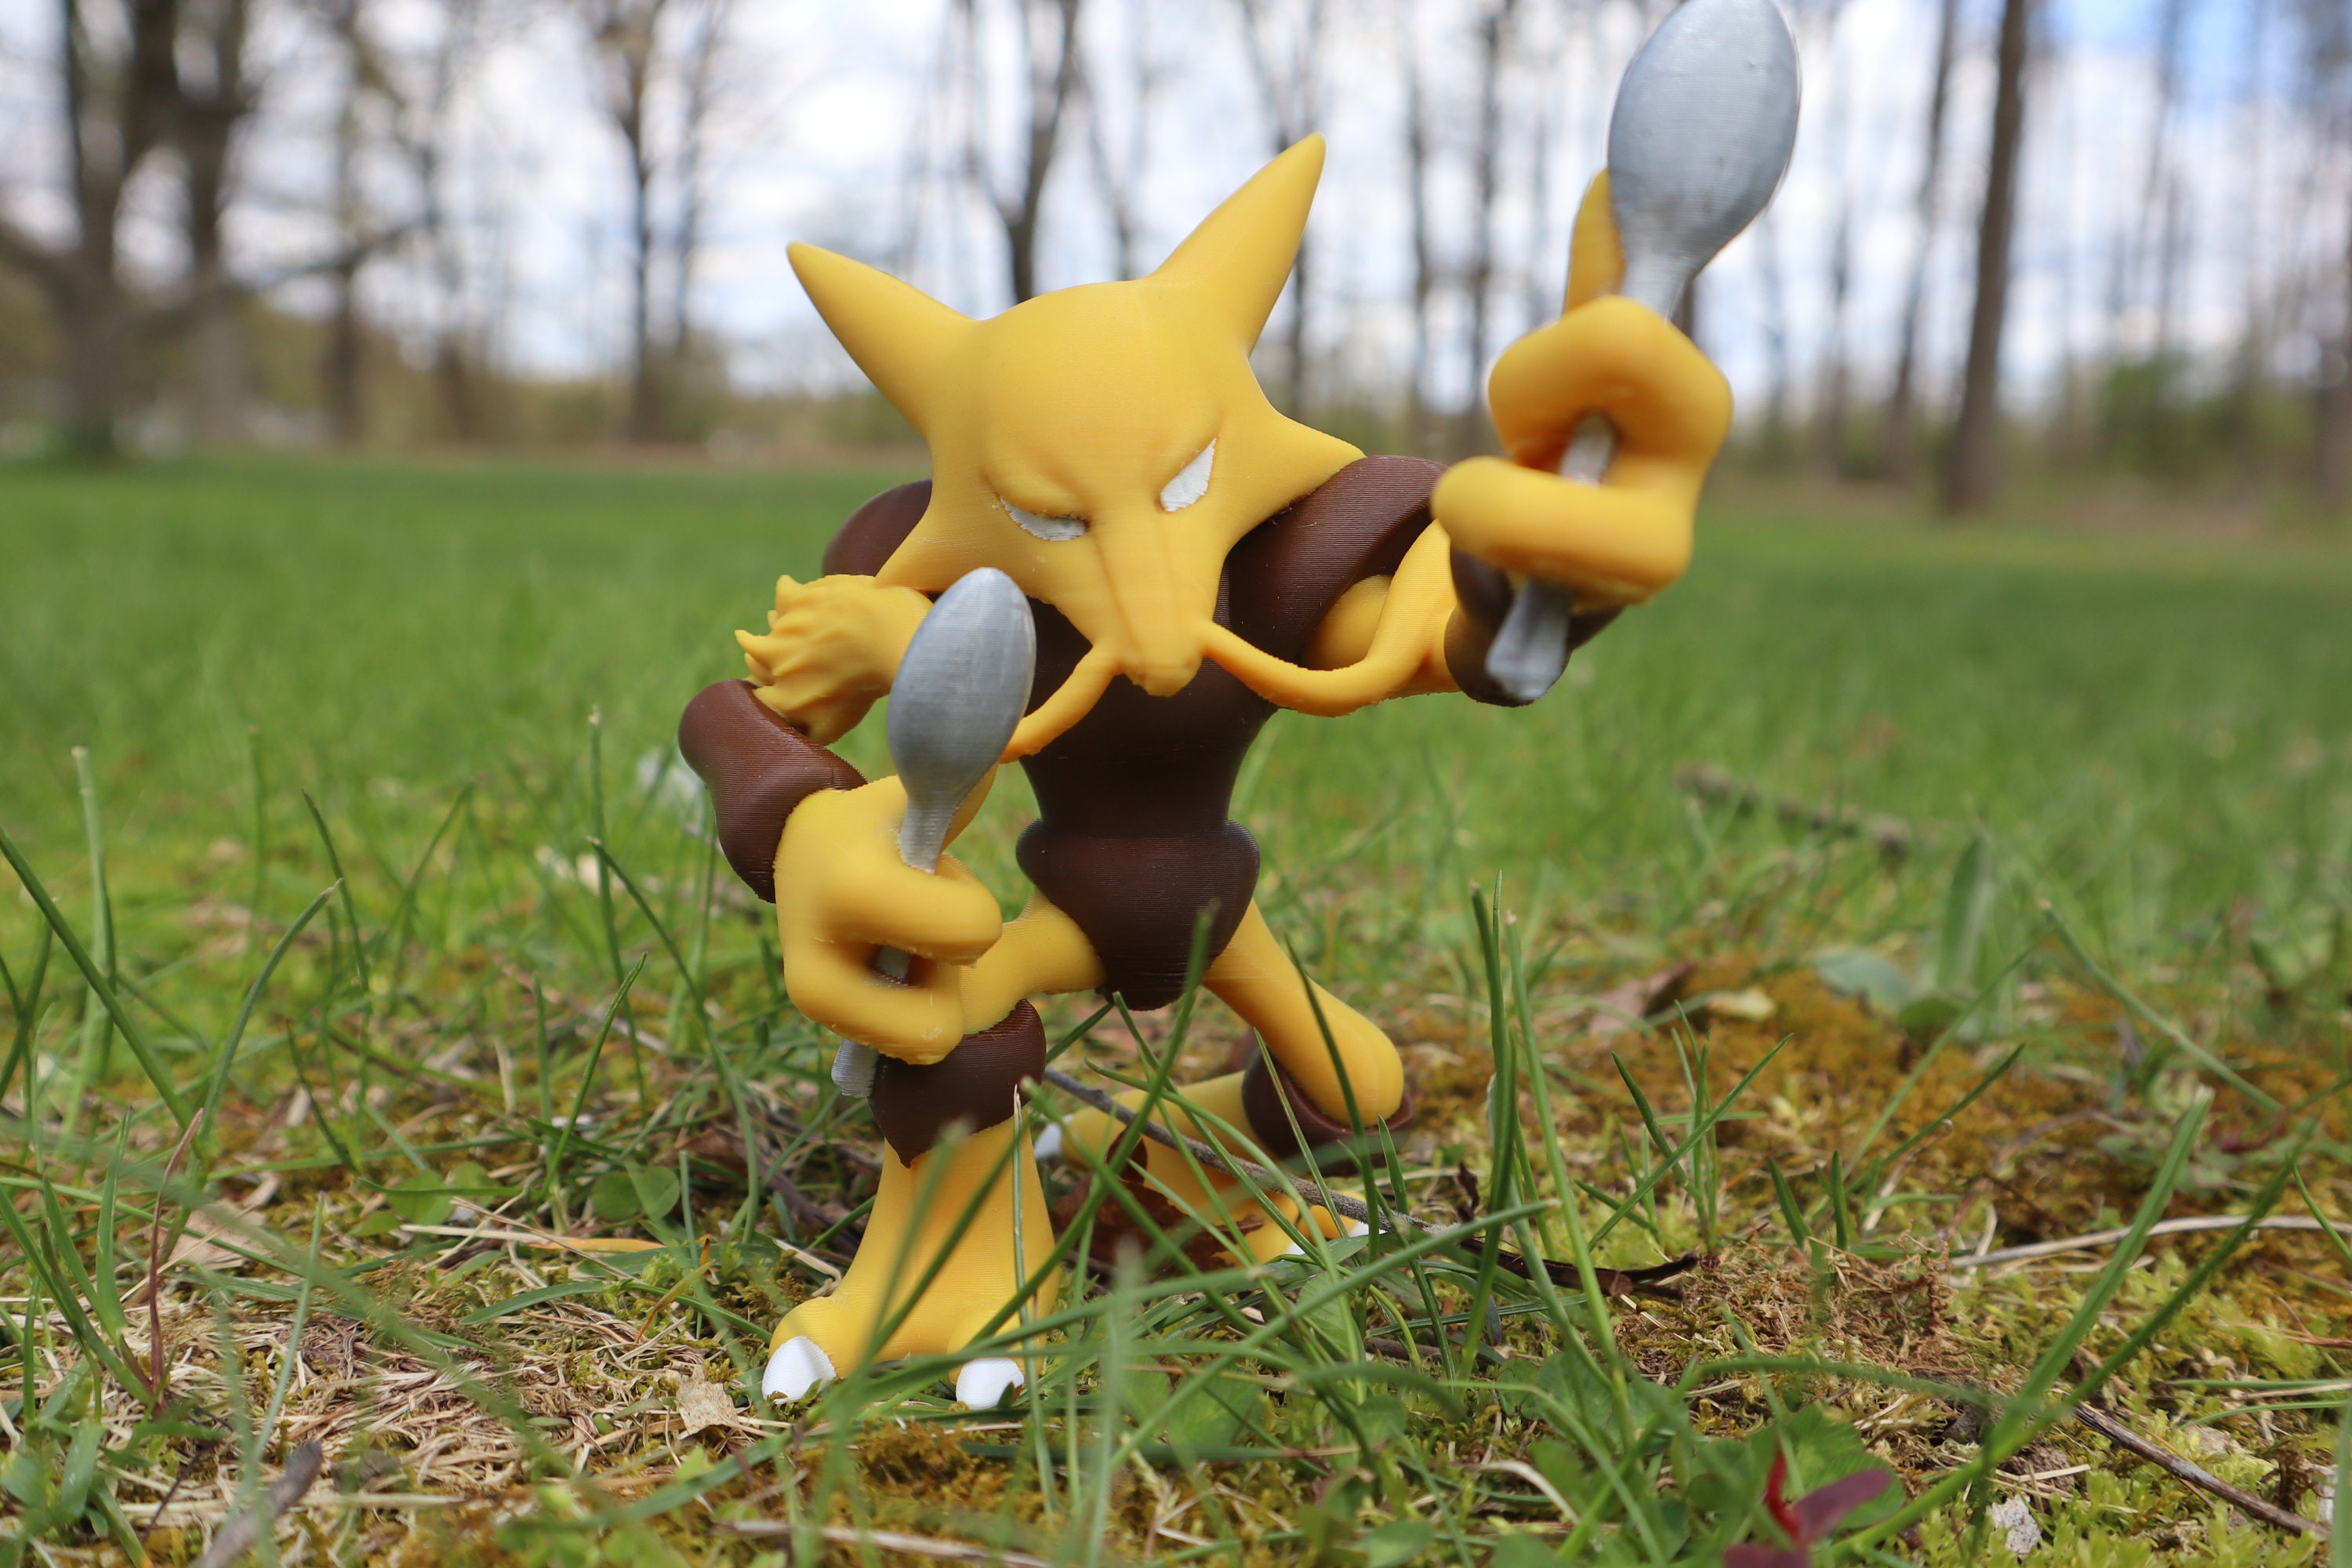 Pokémon Pokédex Series Mega Evolution #065 Alakazam Resin Statue